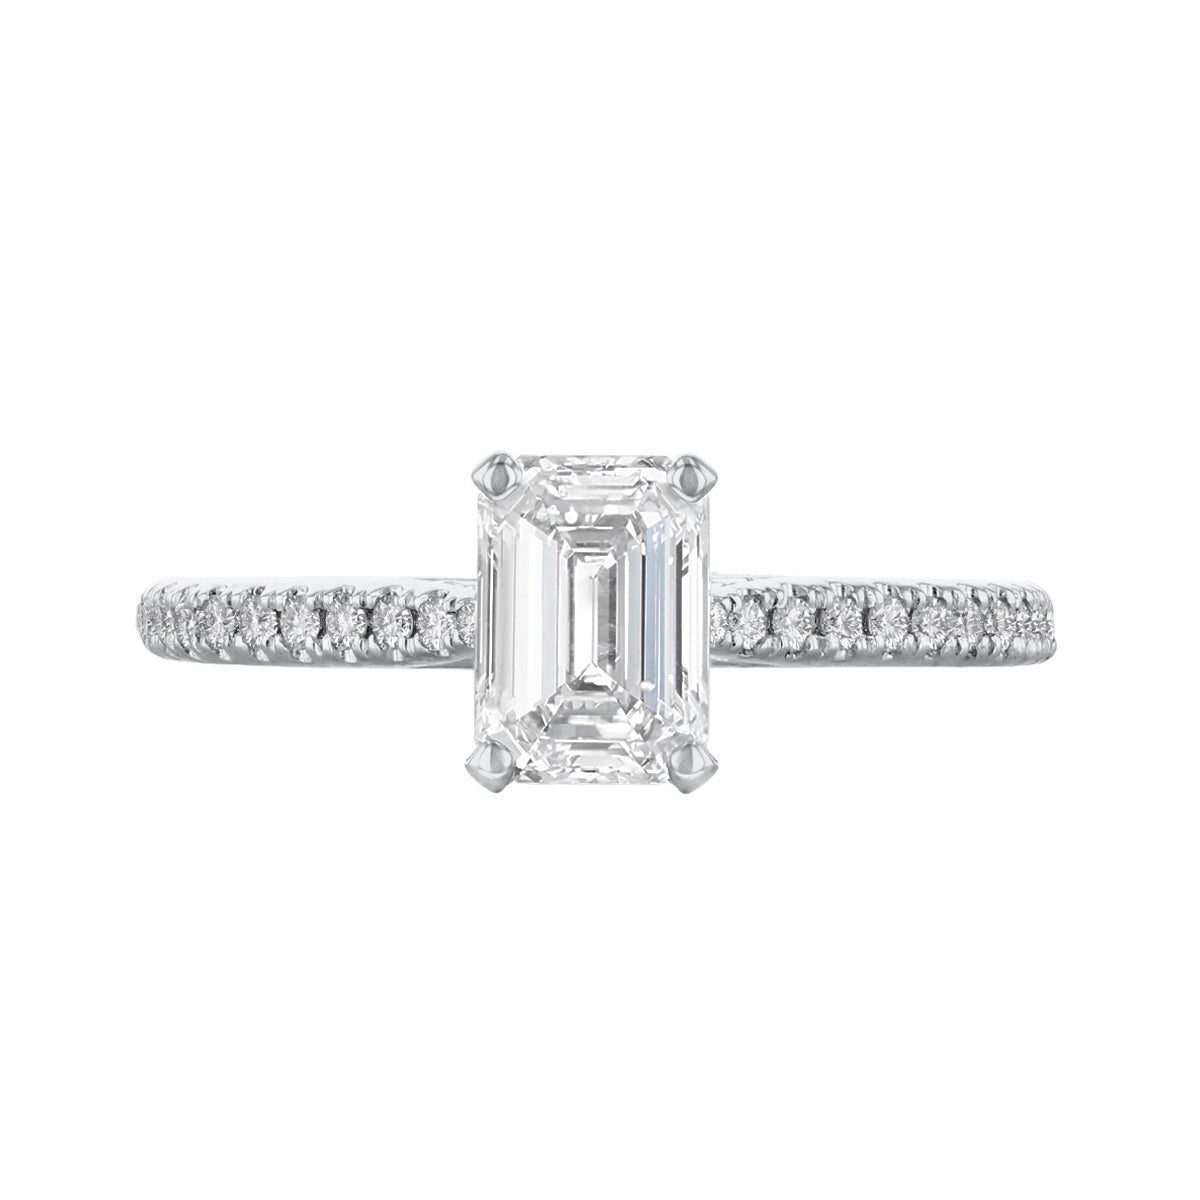 1-20ct-ophelia-shoulder-set-emerald-cut-solitaire-diamond-engagement-ring-platinum